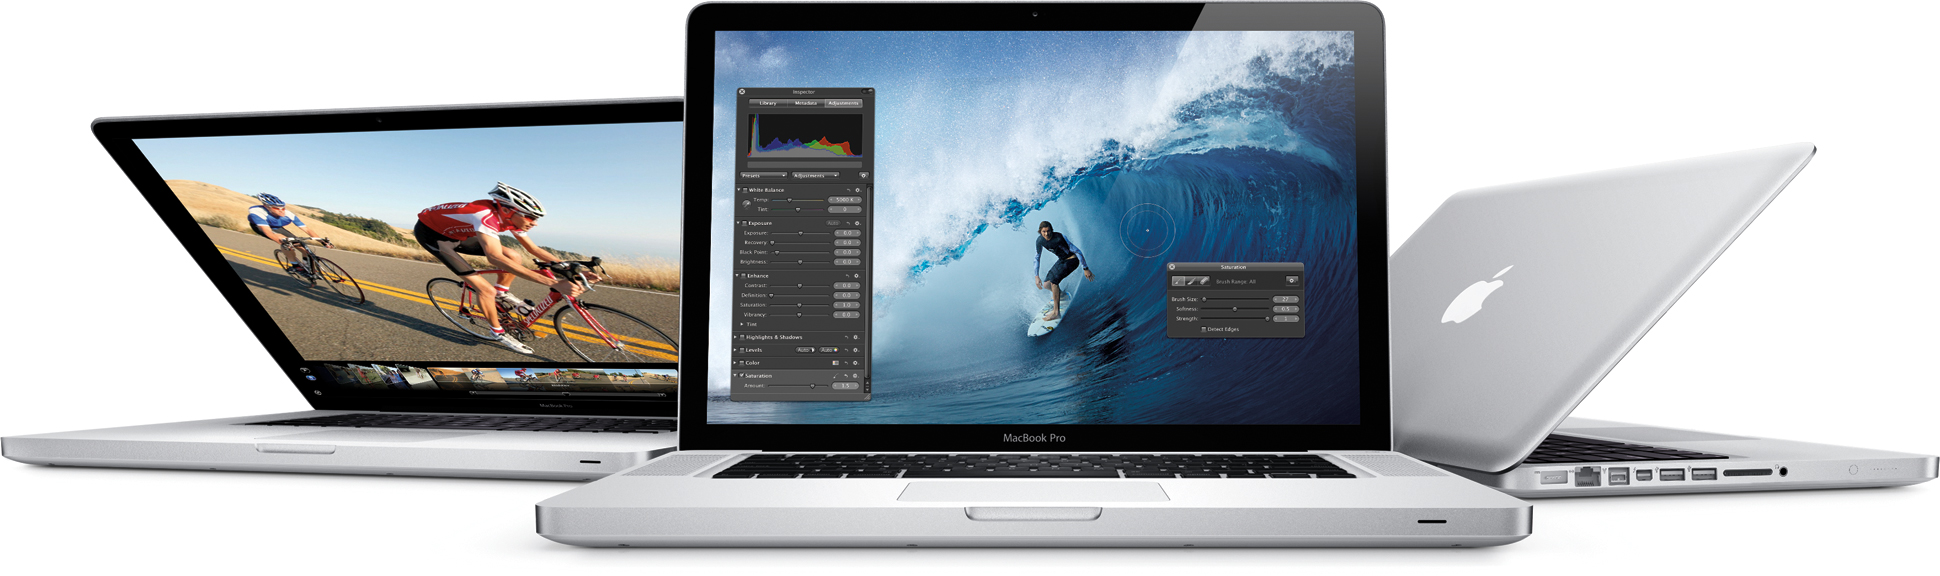 Nova família de MacBooks Pro